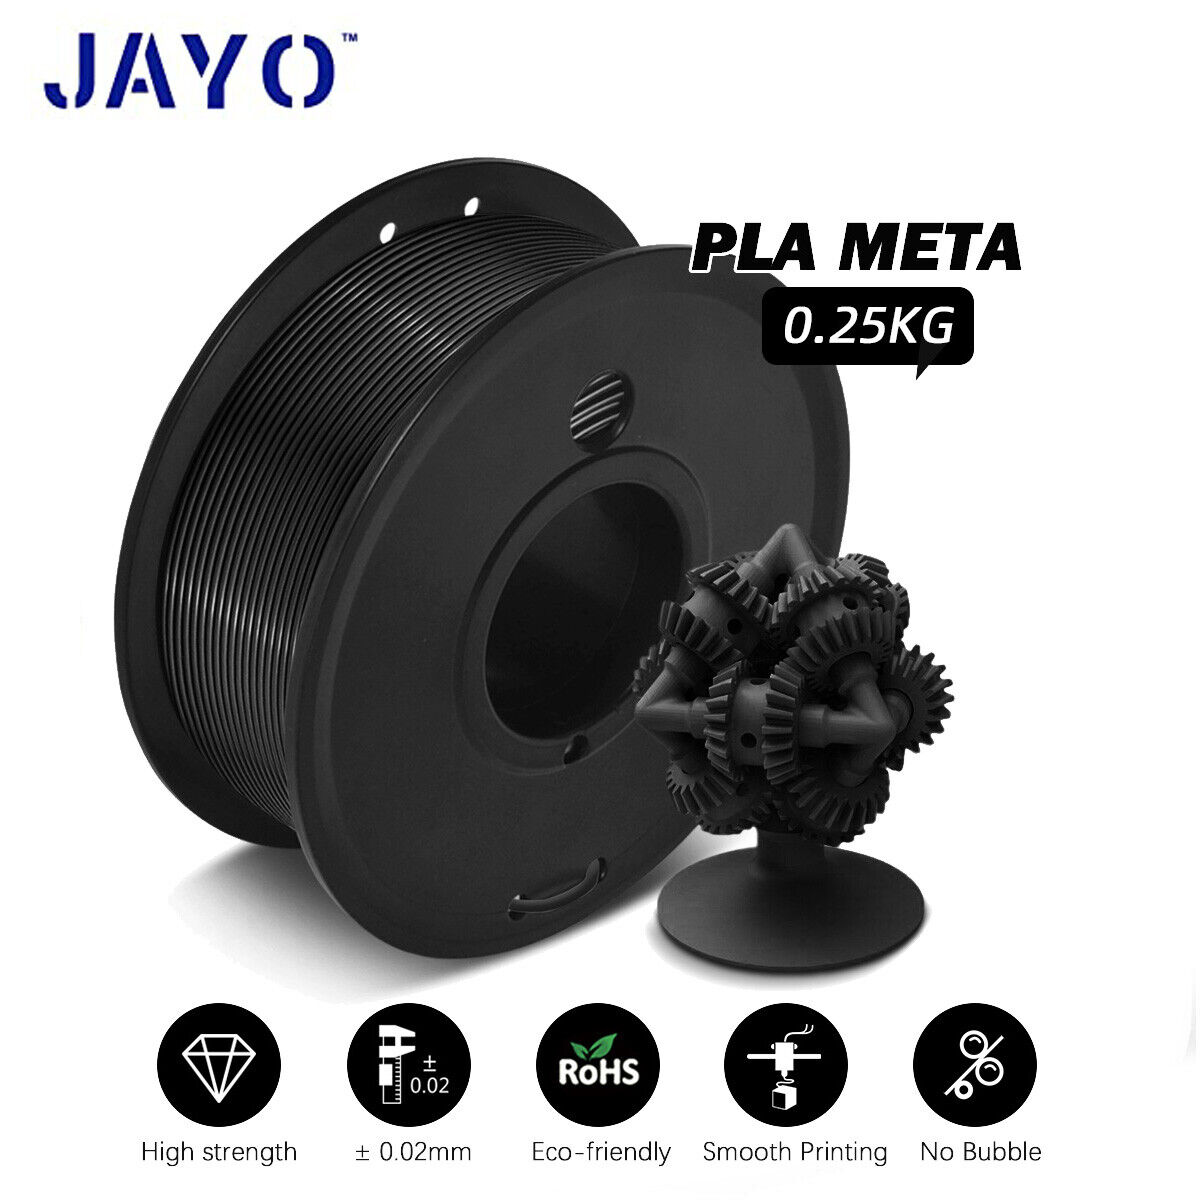 [BUY 10 PAY 6]JAYO PLA Meta PETG PLA+ SILK ABS 3D Printer Filament 1.75mm 1.1KG